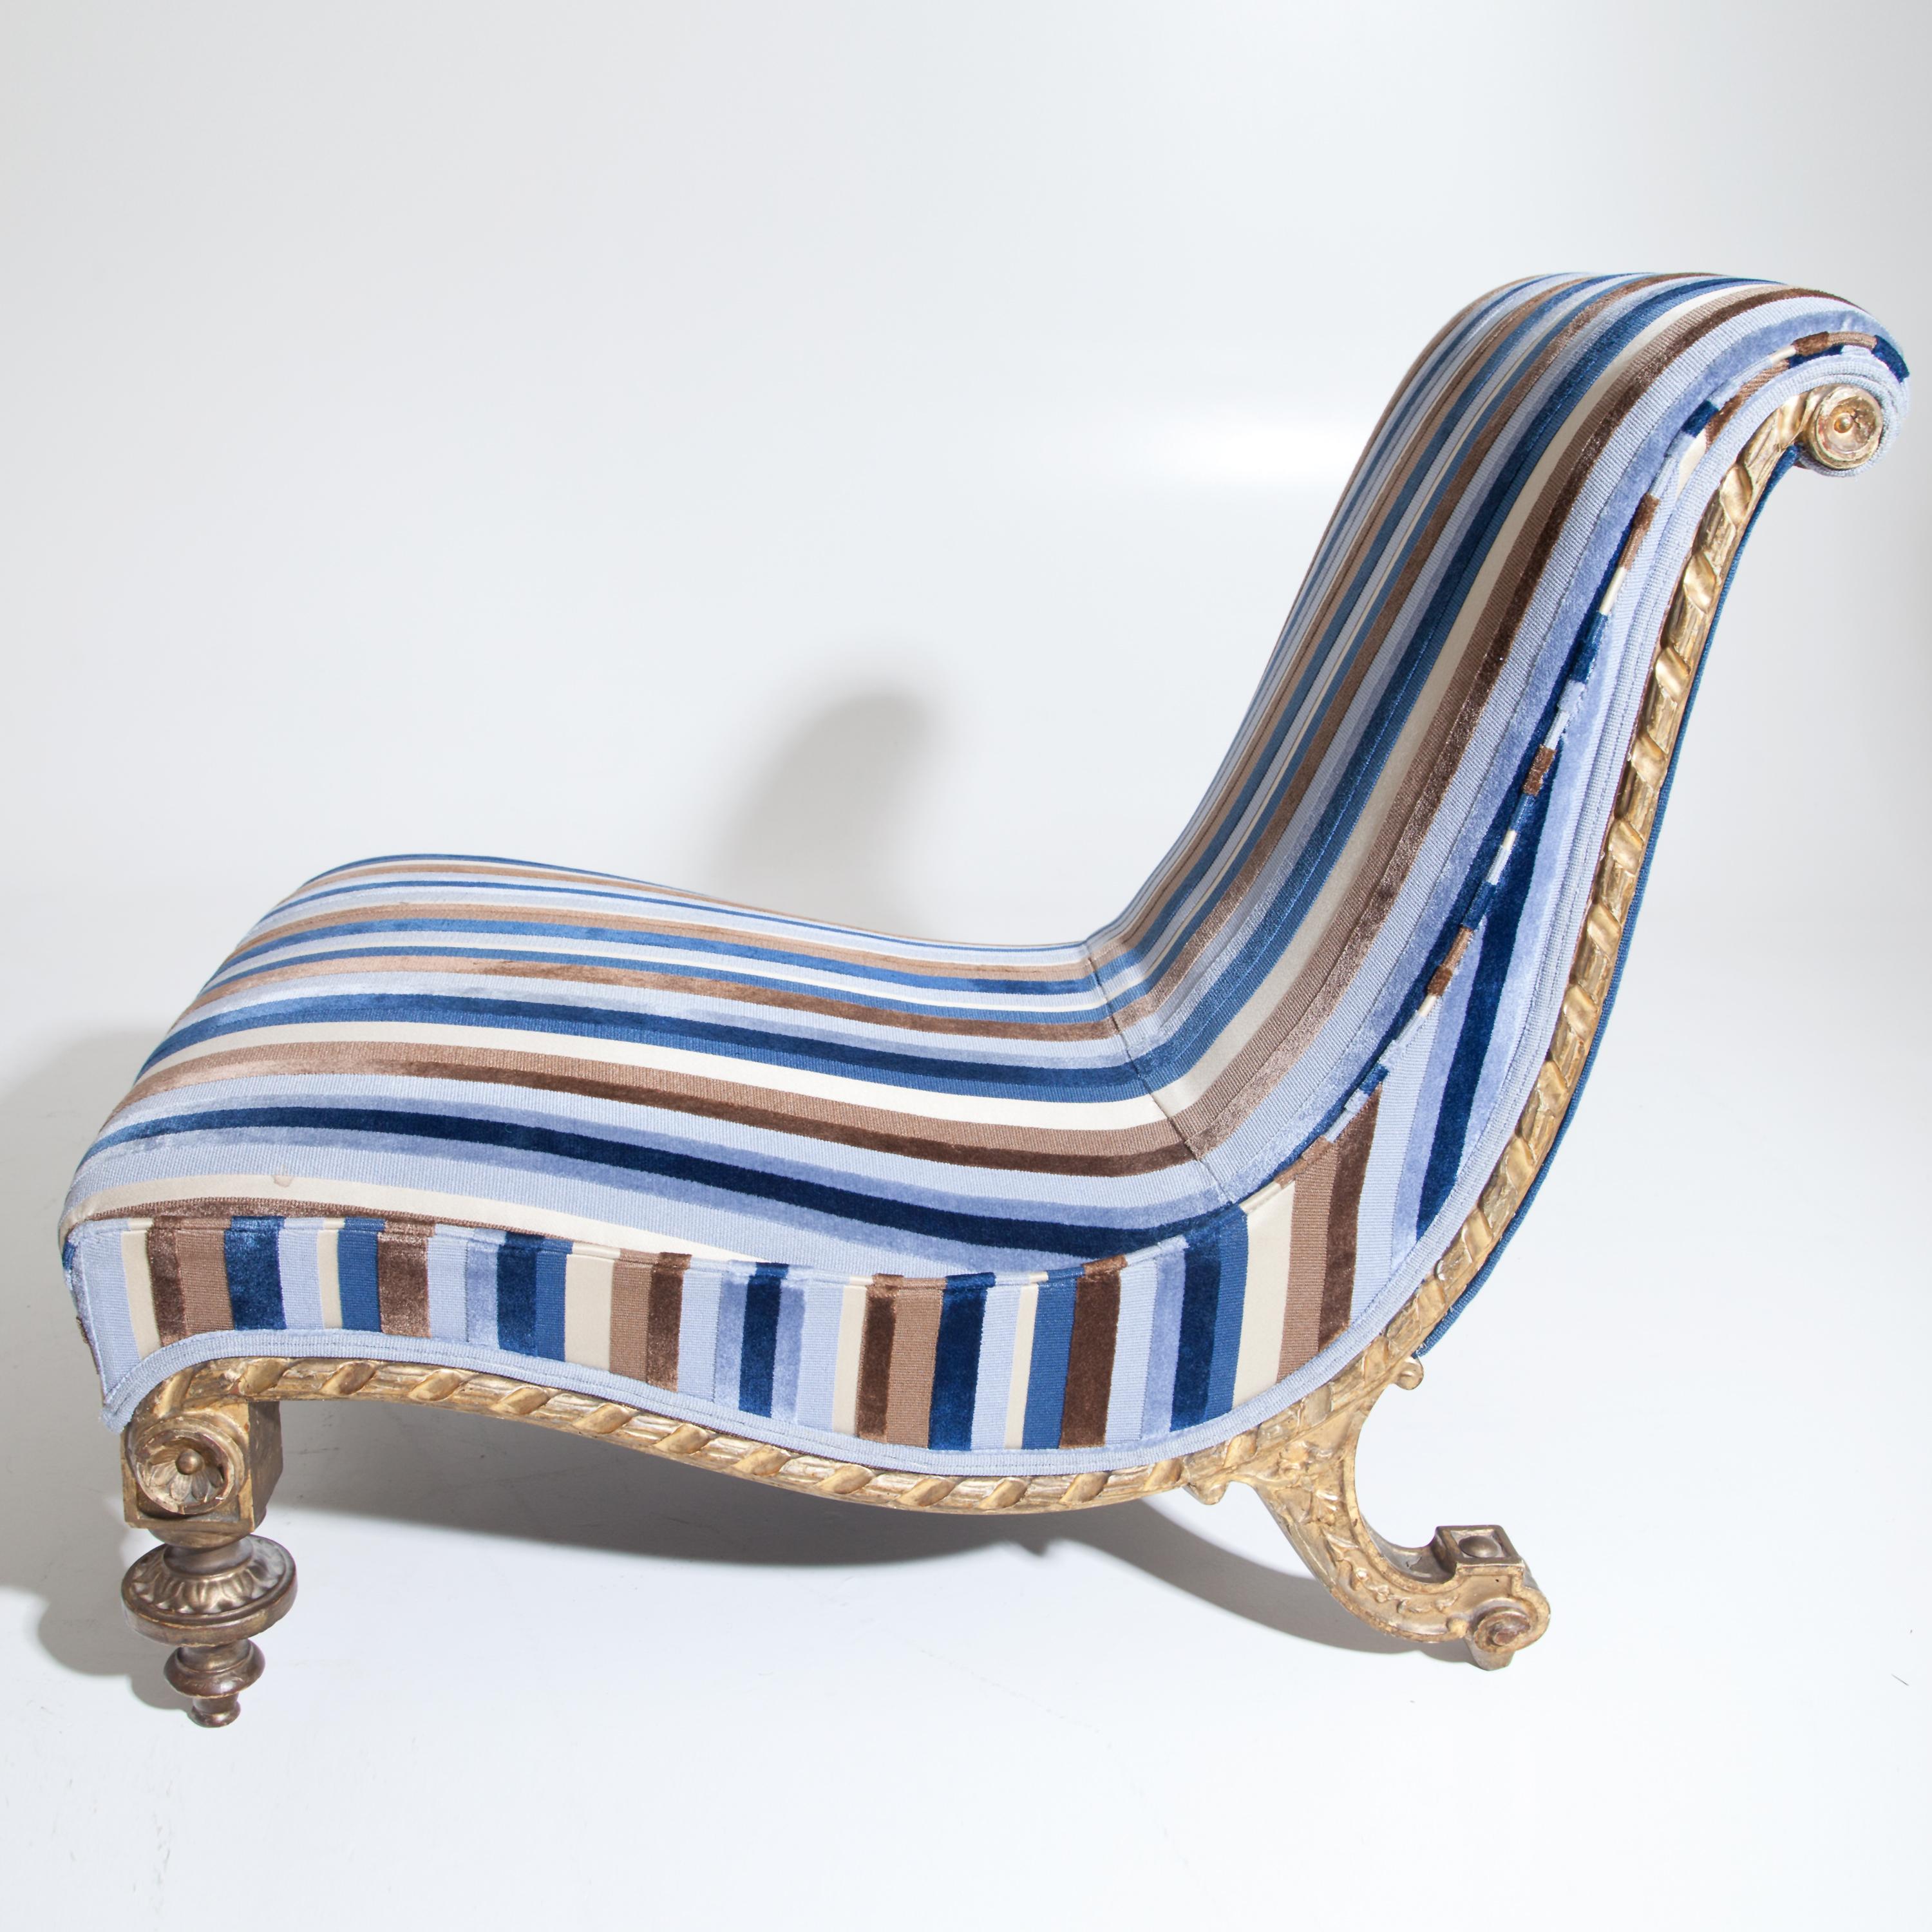 Italian Gilt Lounge Chair, Italy/Lucca, circa 1825-1830